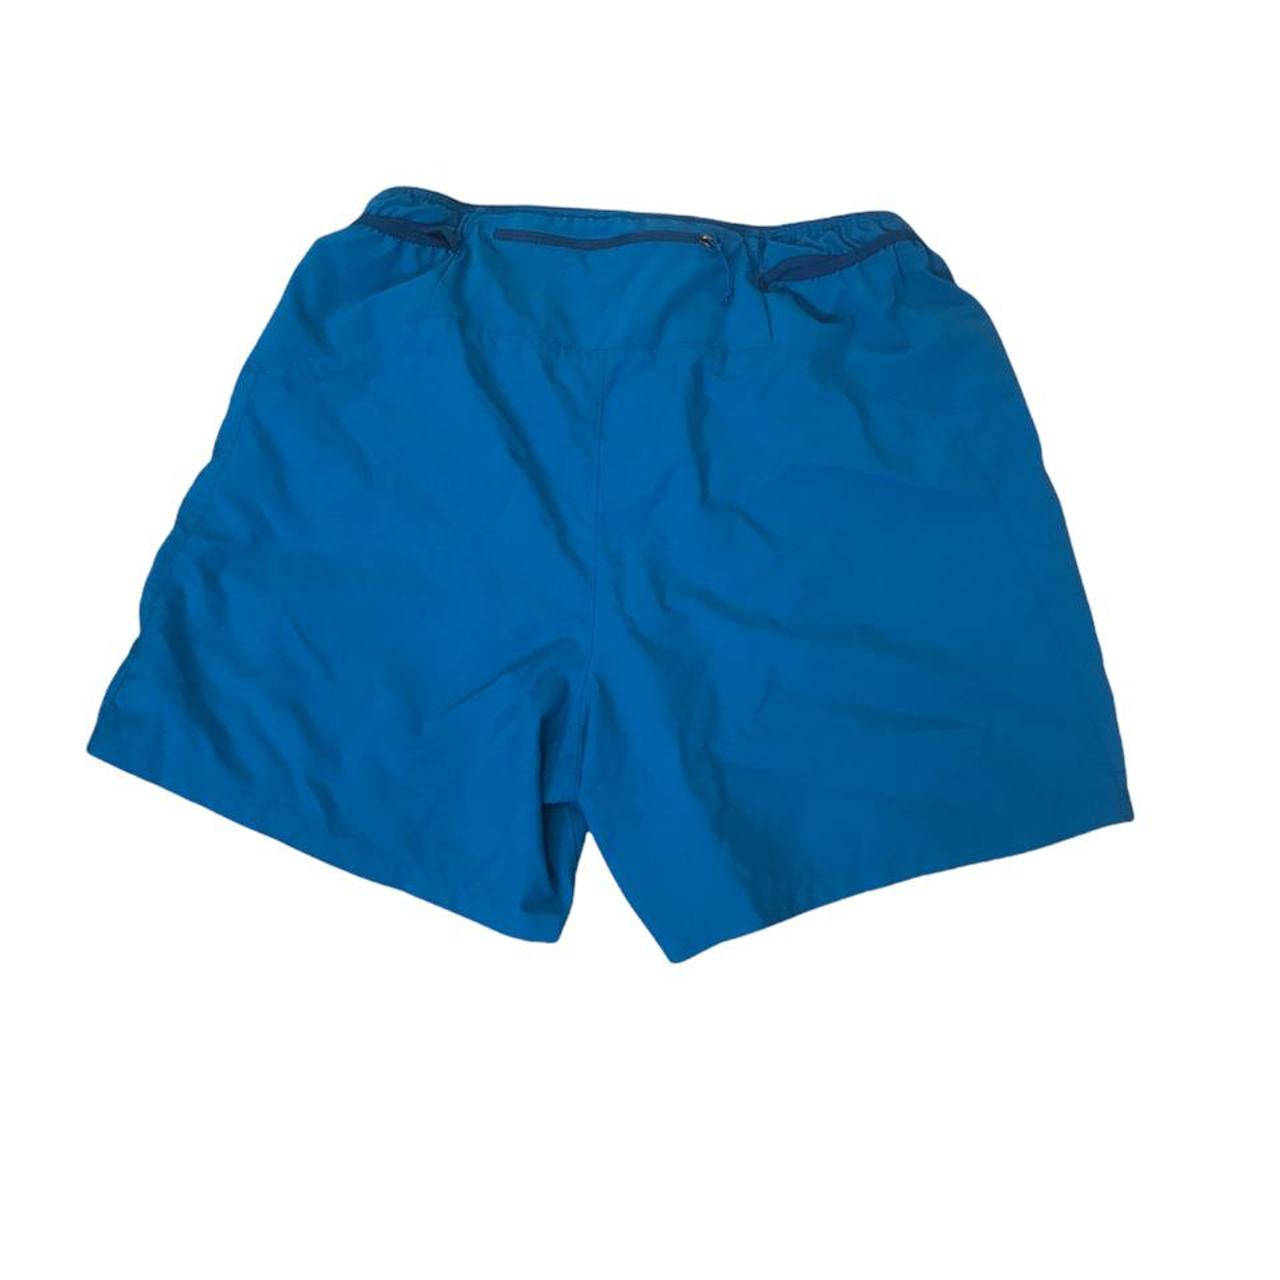 Product Image 2 - Patagonia Running Shorts 

- Size